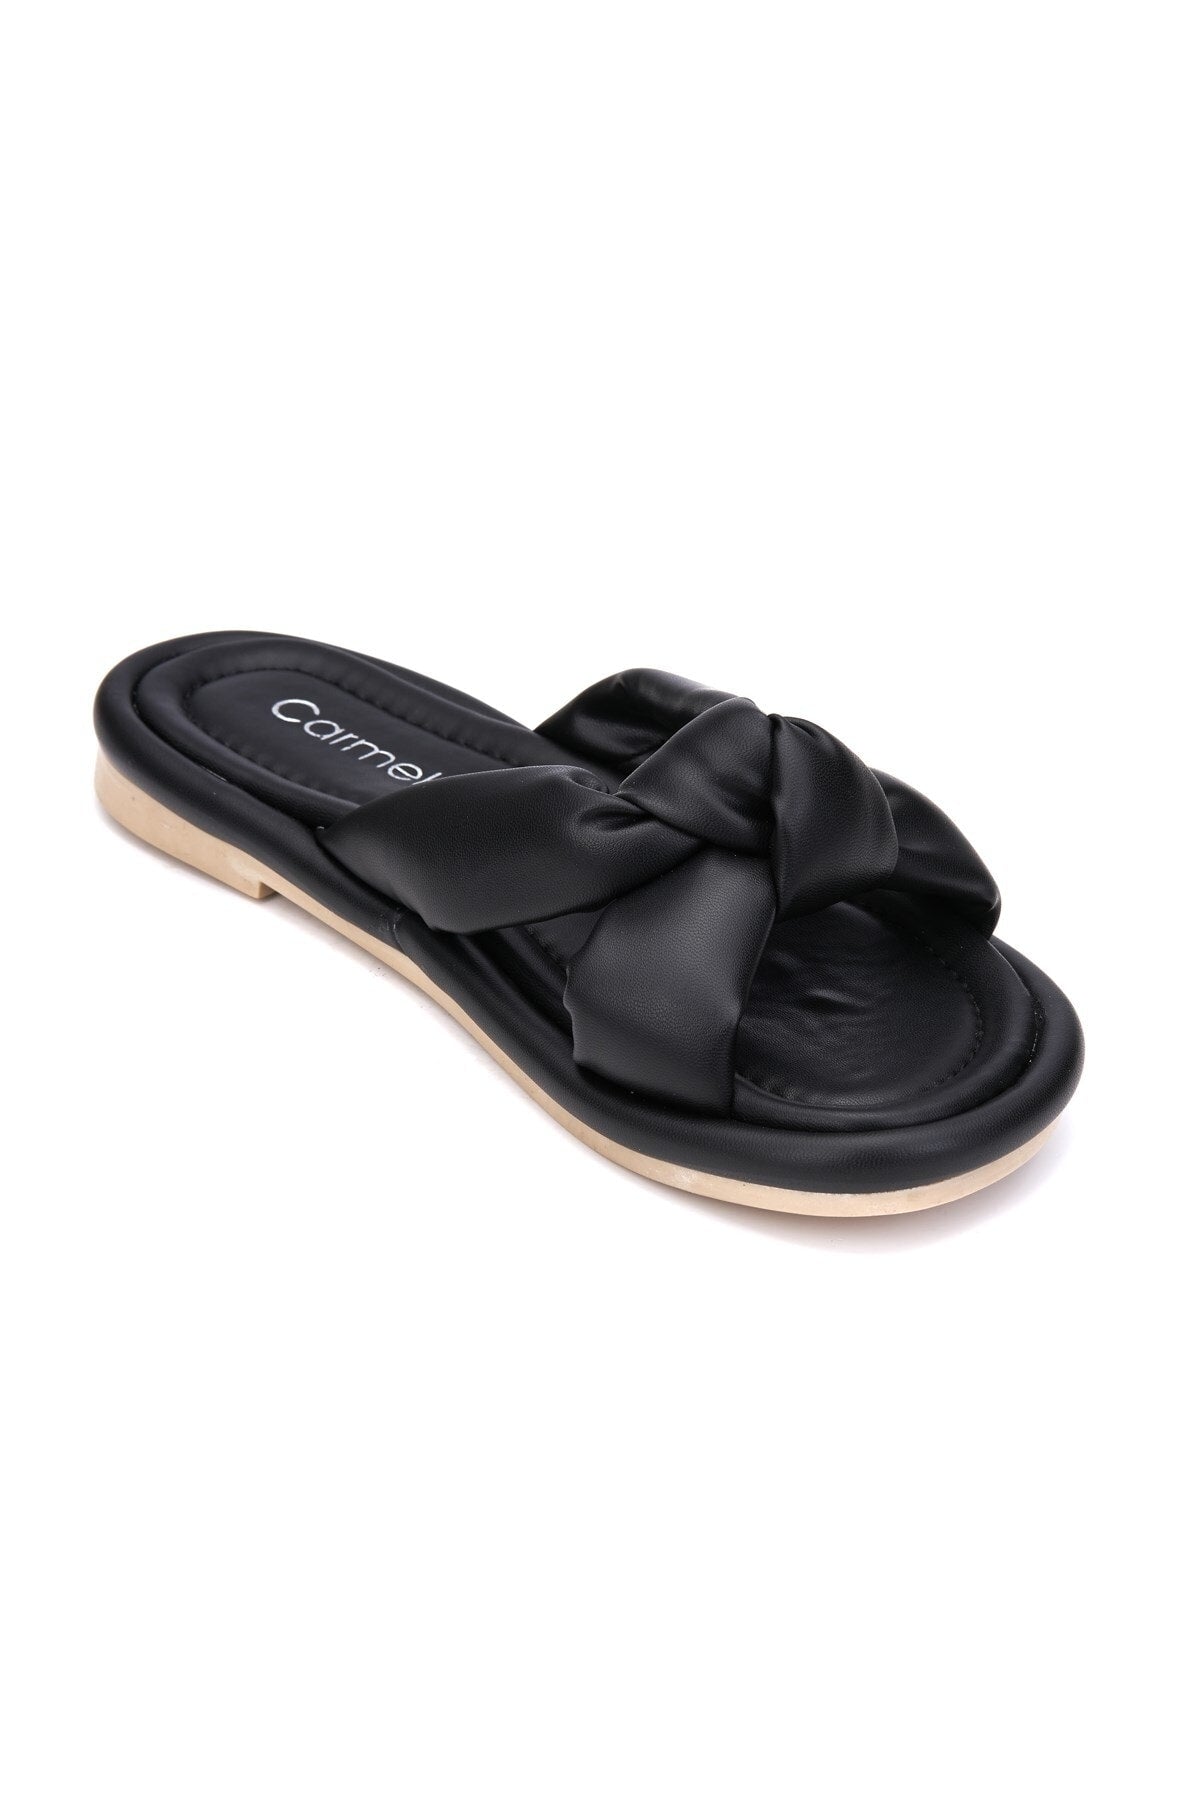 Daily Female Puff Slipper Soft Sole Light Flexible Pofuduk Ribbon Summer Casual Sandals 023